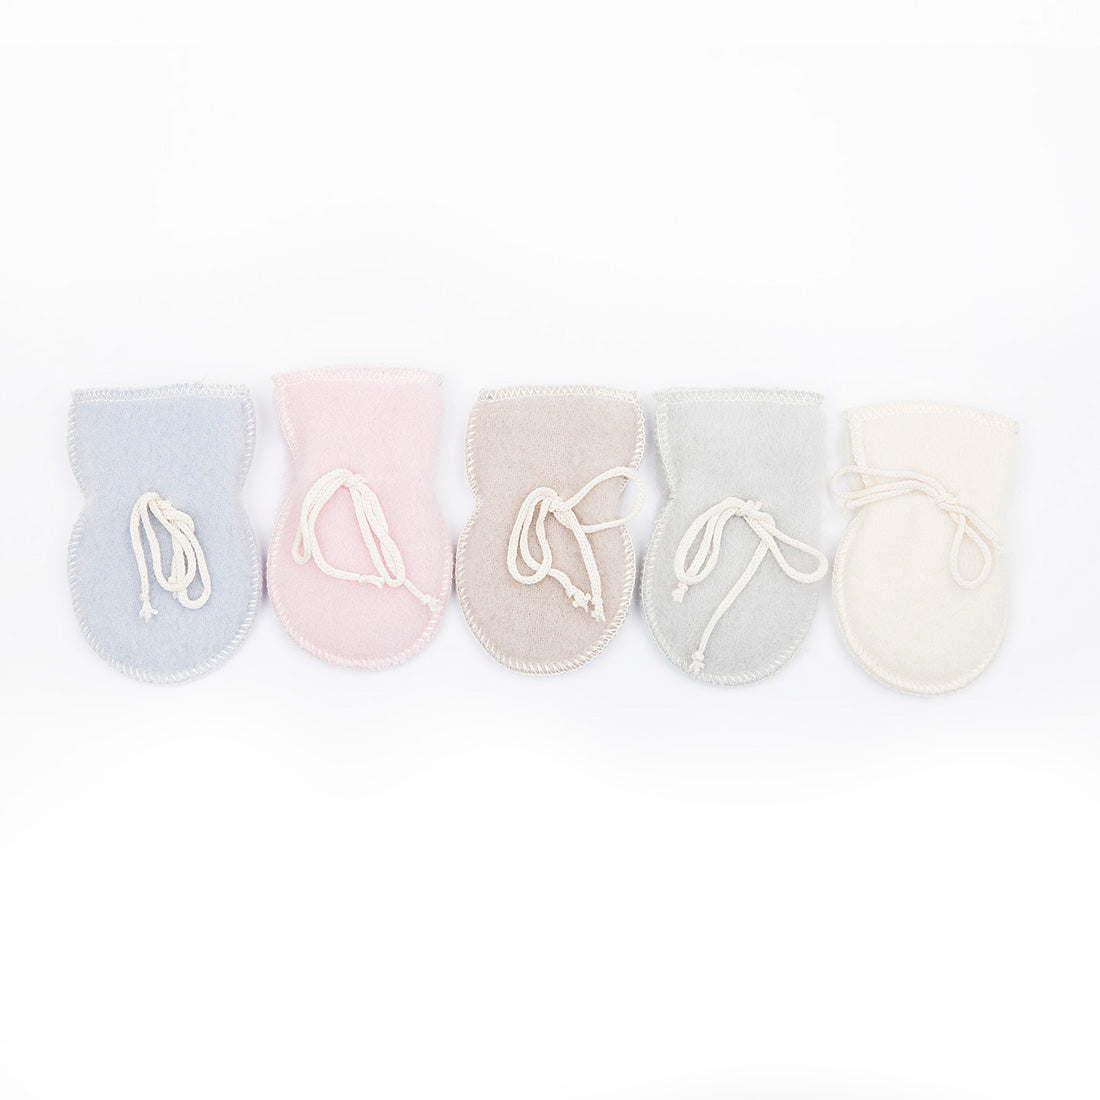 LANACare Baby Mittens in Organic Merino Wool - SOFT PINK